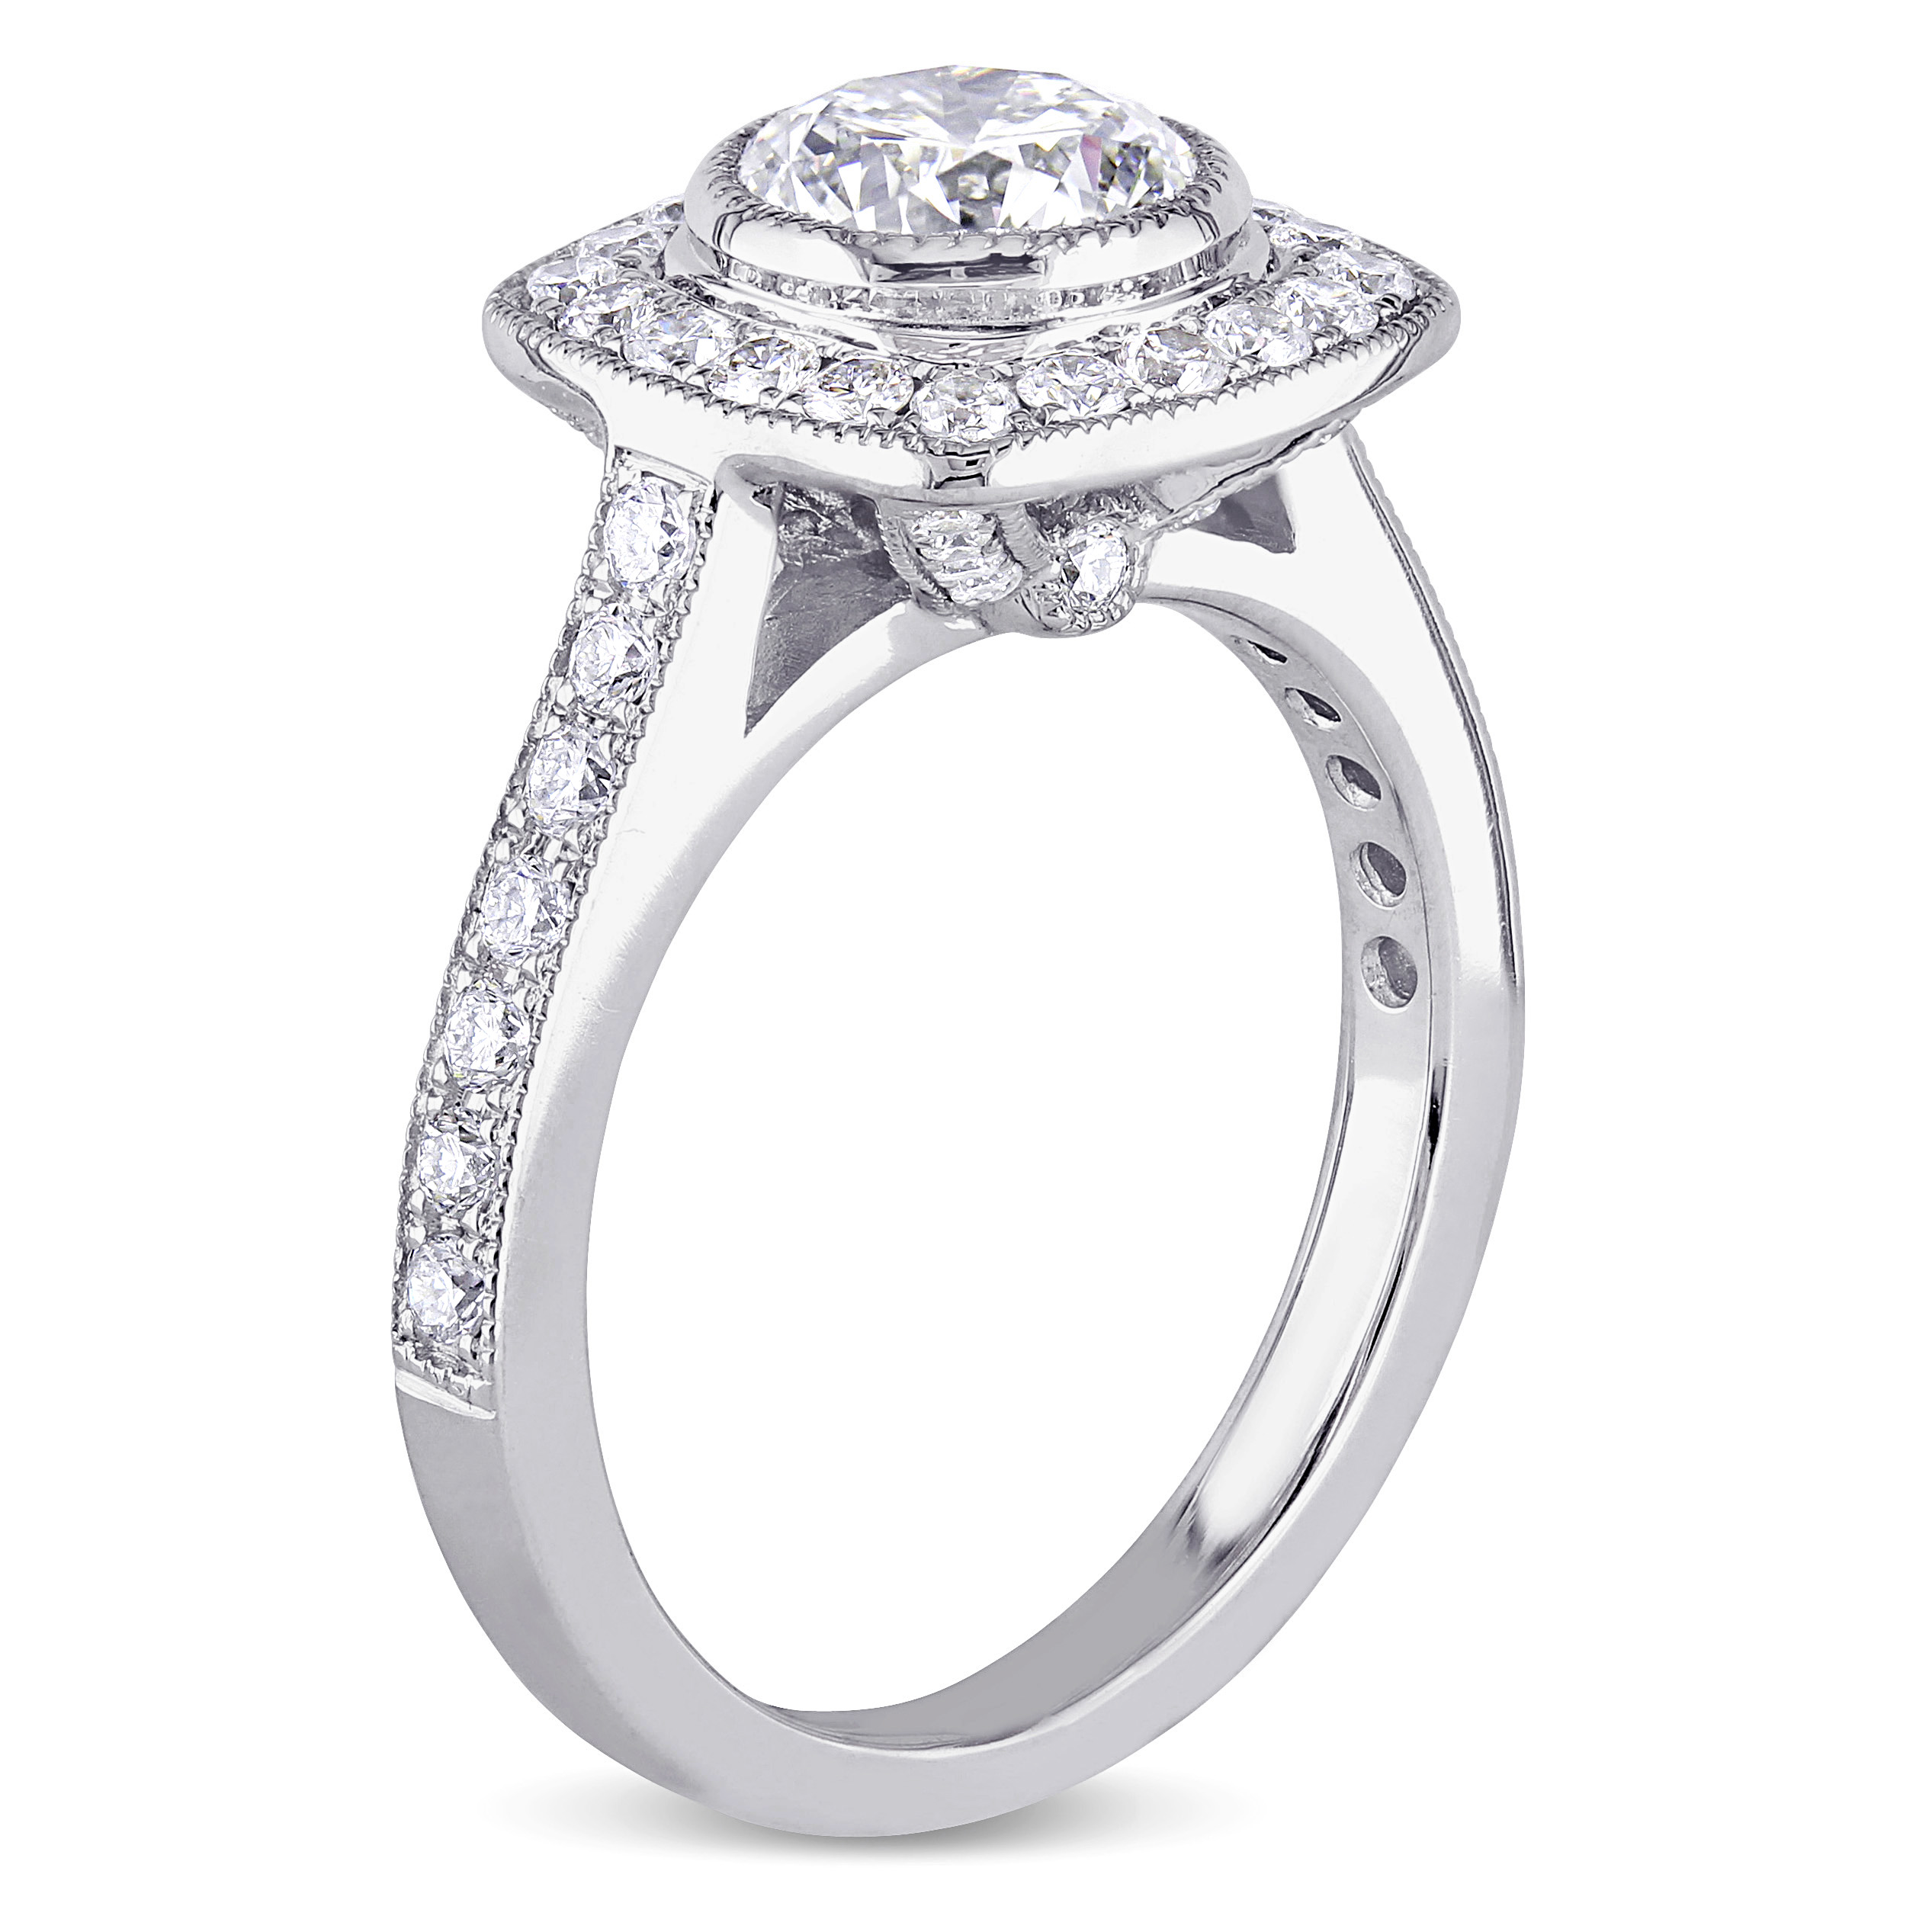 1 1/2 CT TW Diamond Bezel Set Halo Engagement Ring in 18k White Gold